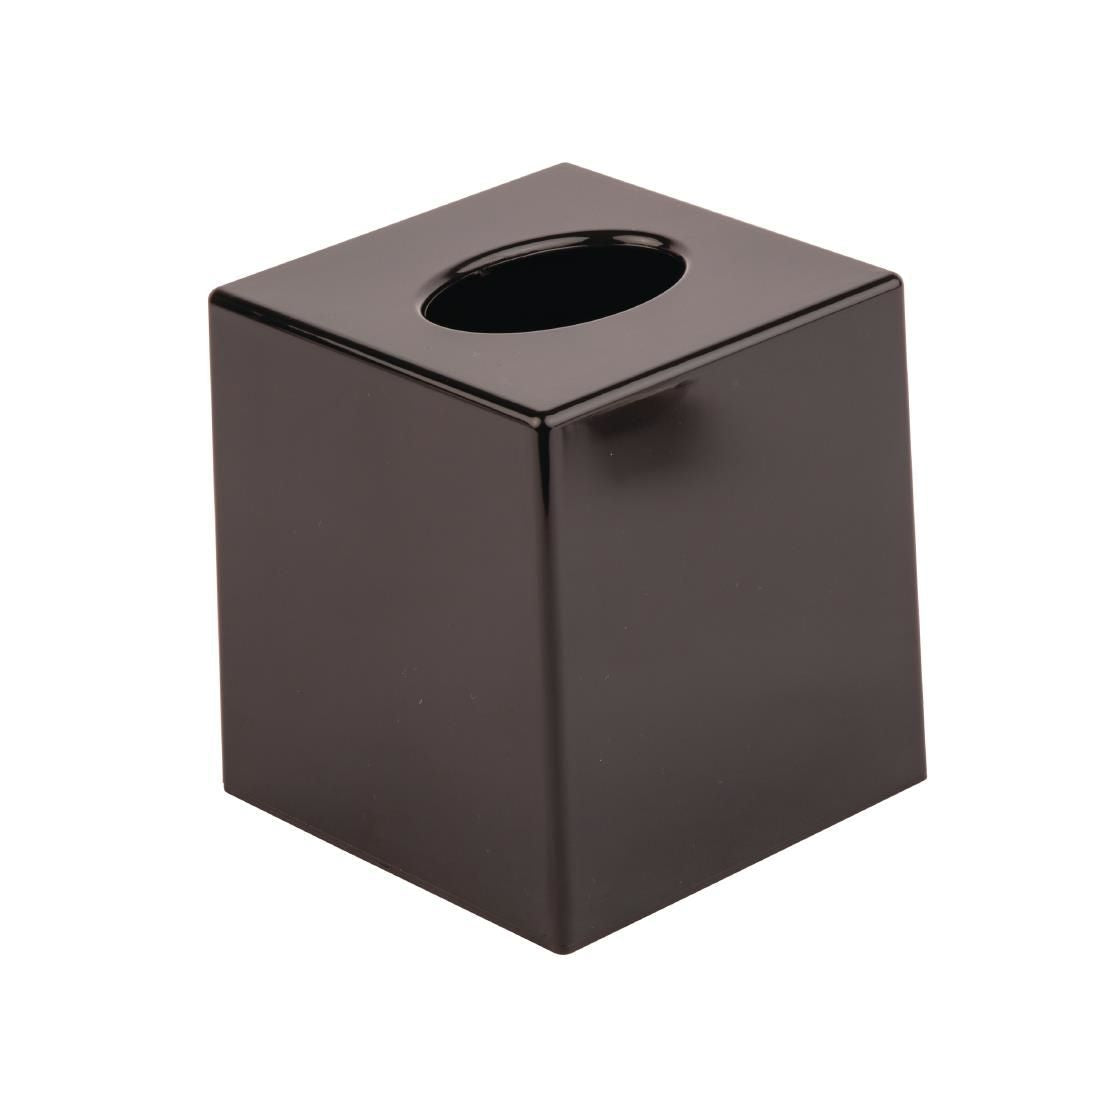 Cube Tissue Holder JD Catering Equipment Solutions Ltd